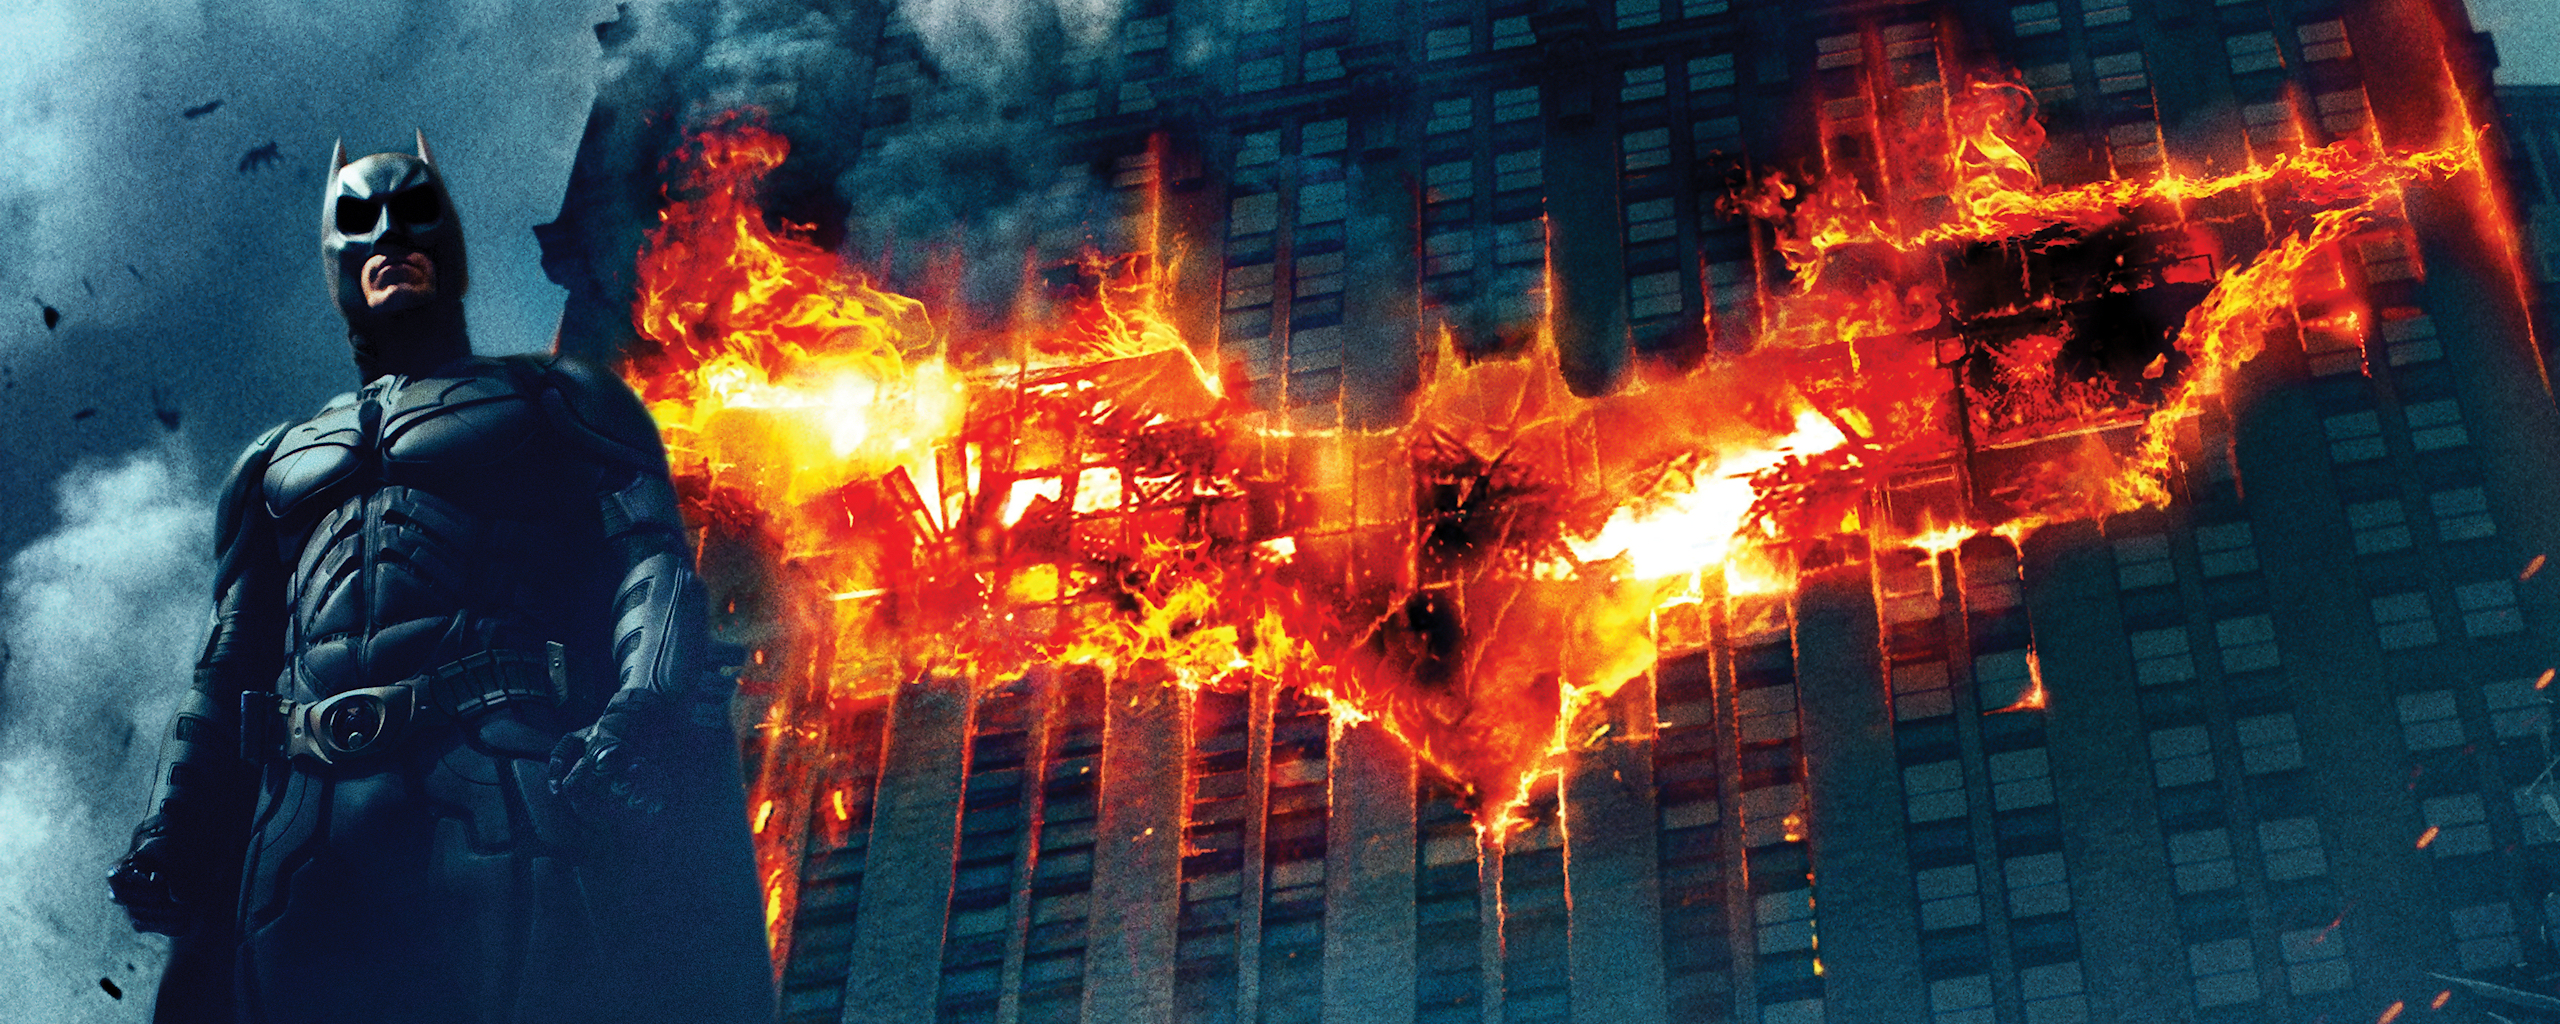 Batman – The Dark Knight – Burnt Building Logo « MyConfinedSpace